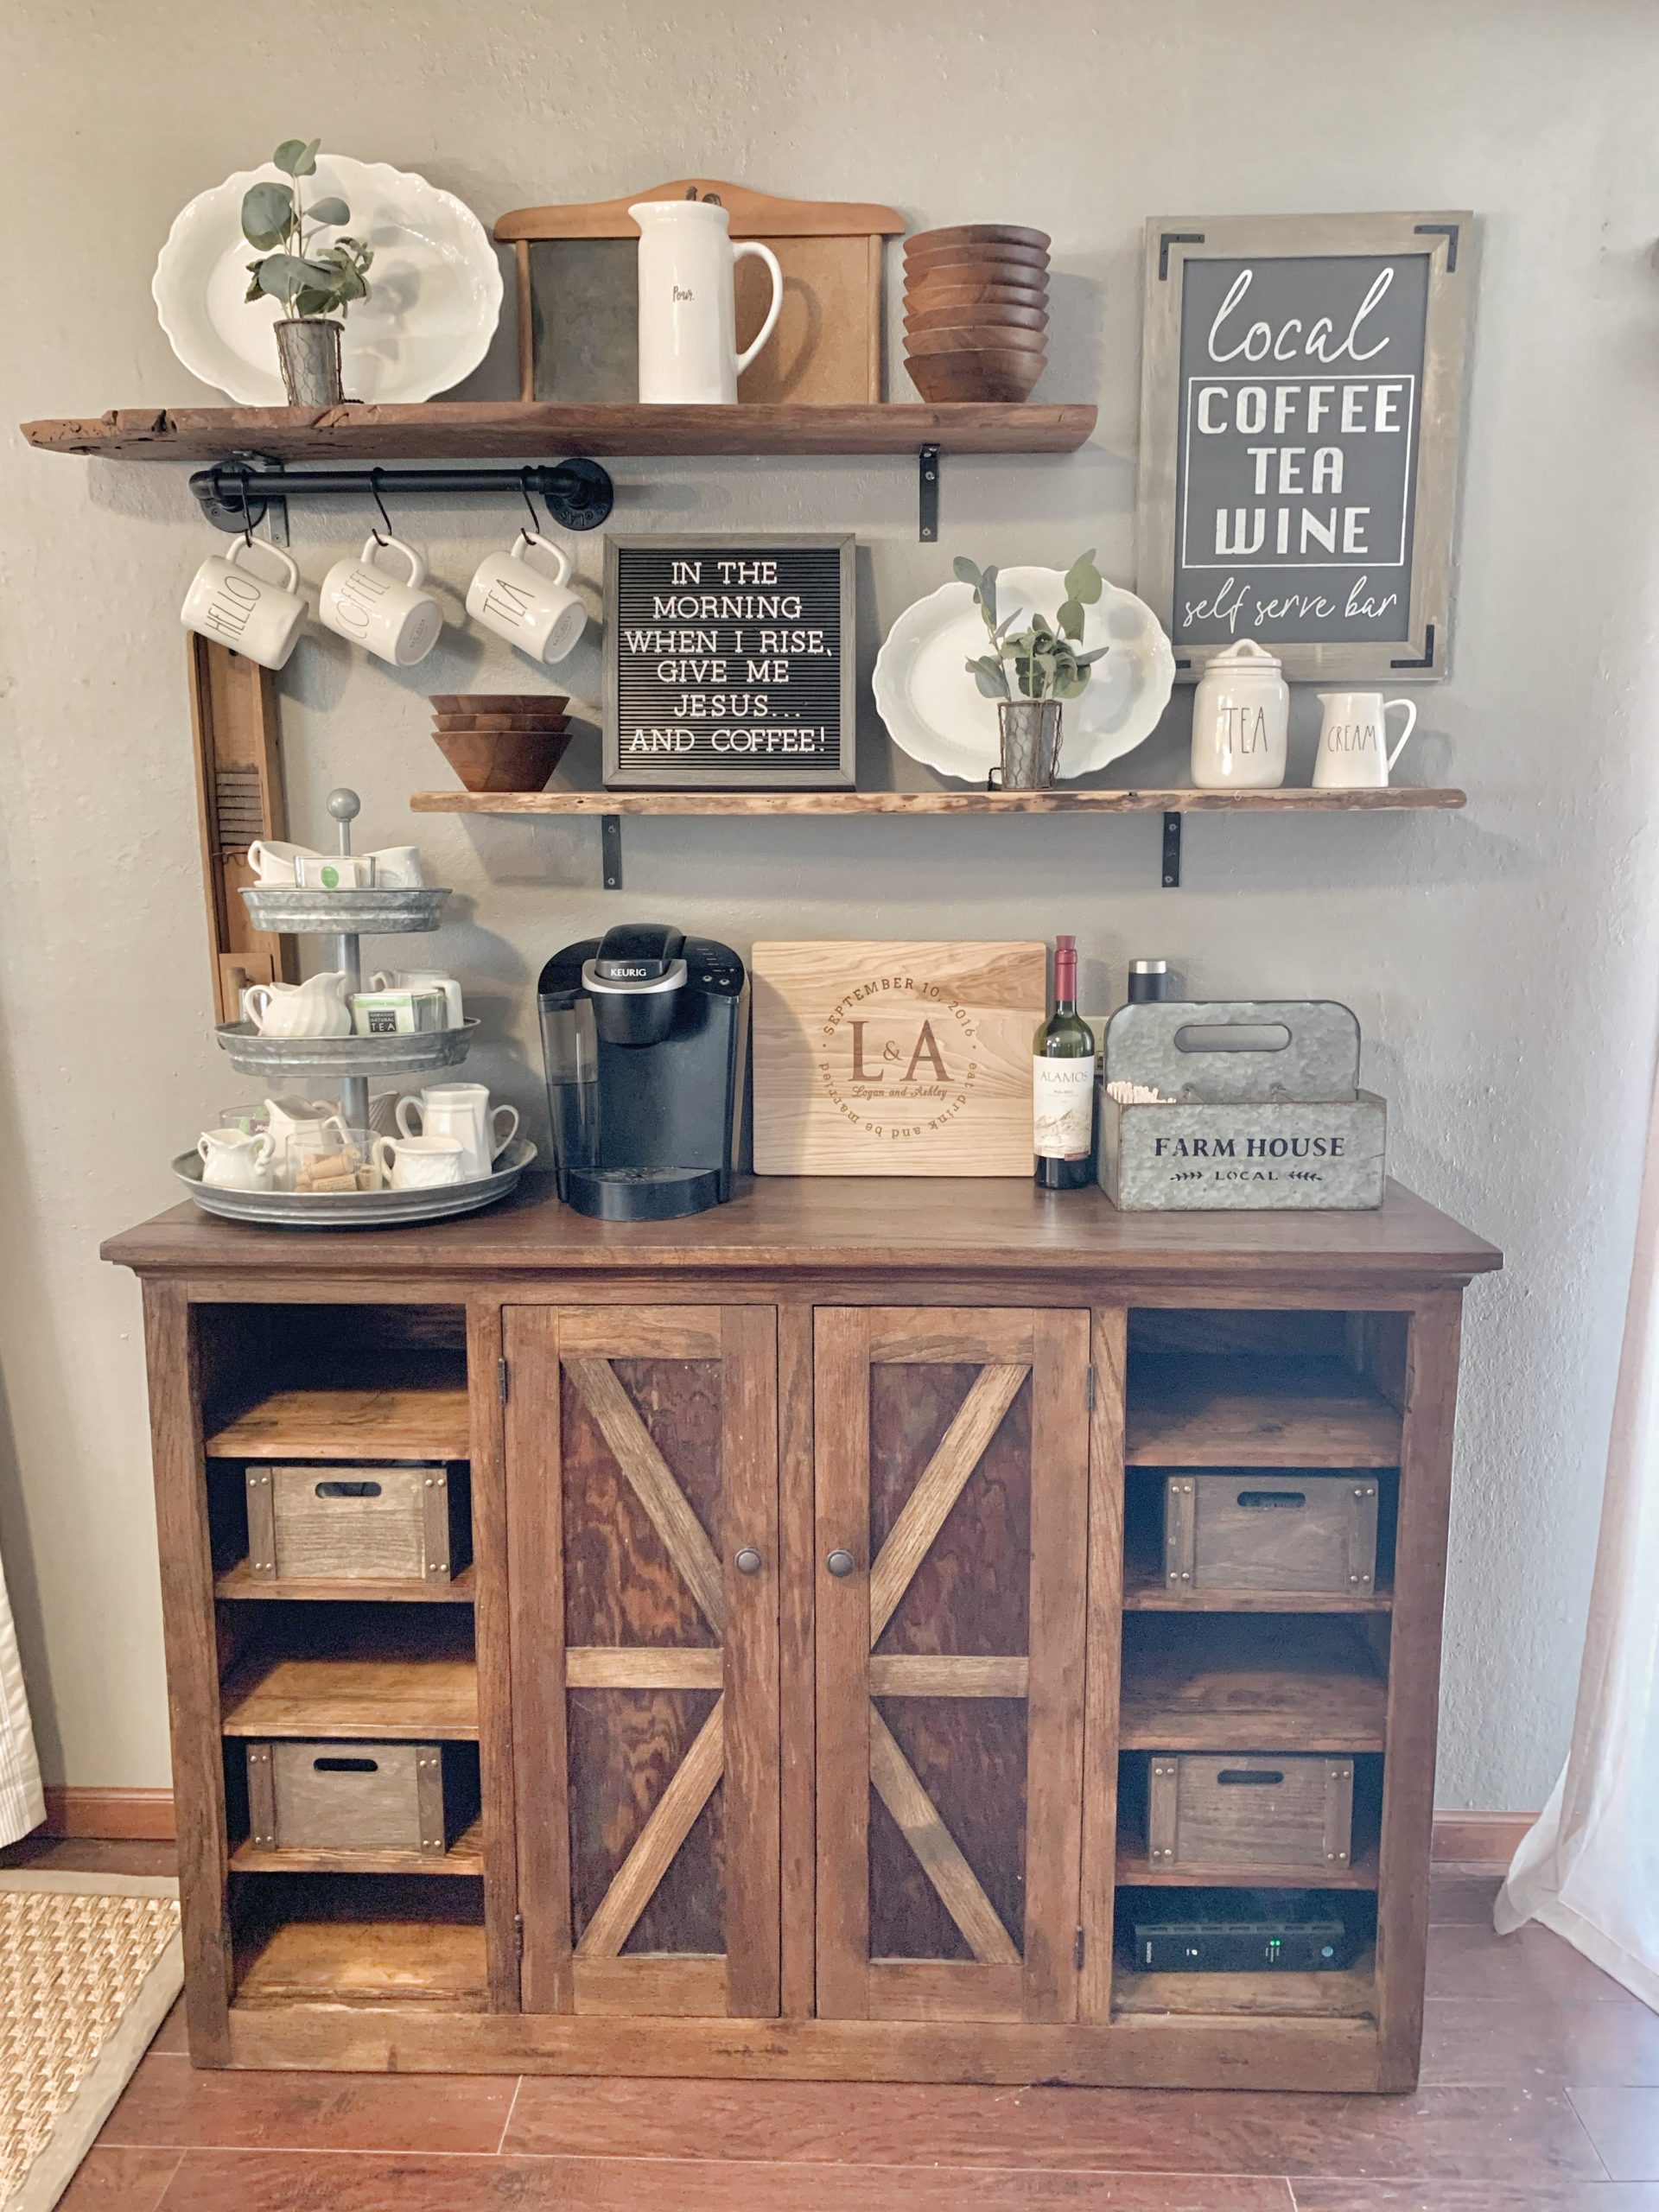 DIY Coffee Bar Ideas - Convert An Old Dresser or Table! - Thrifty